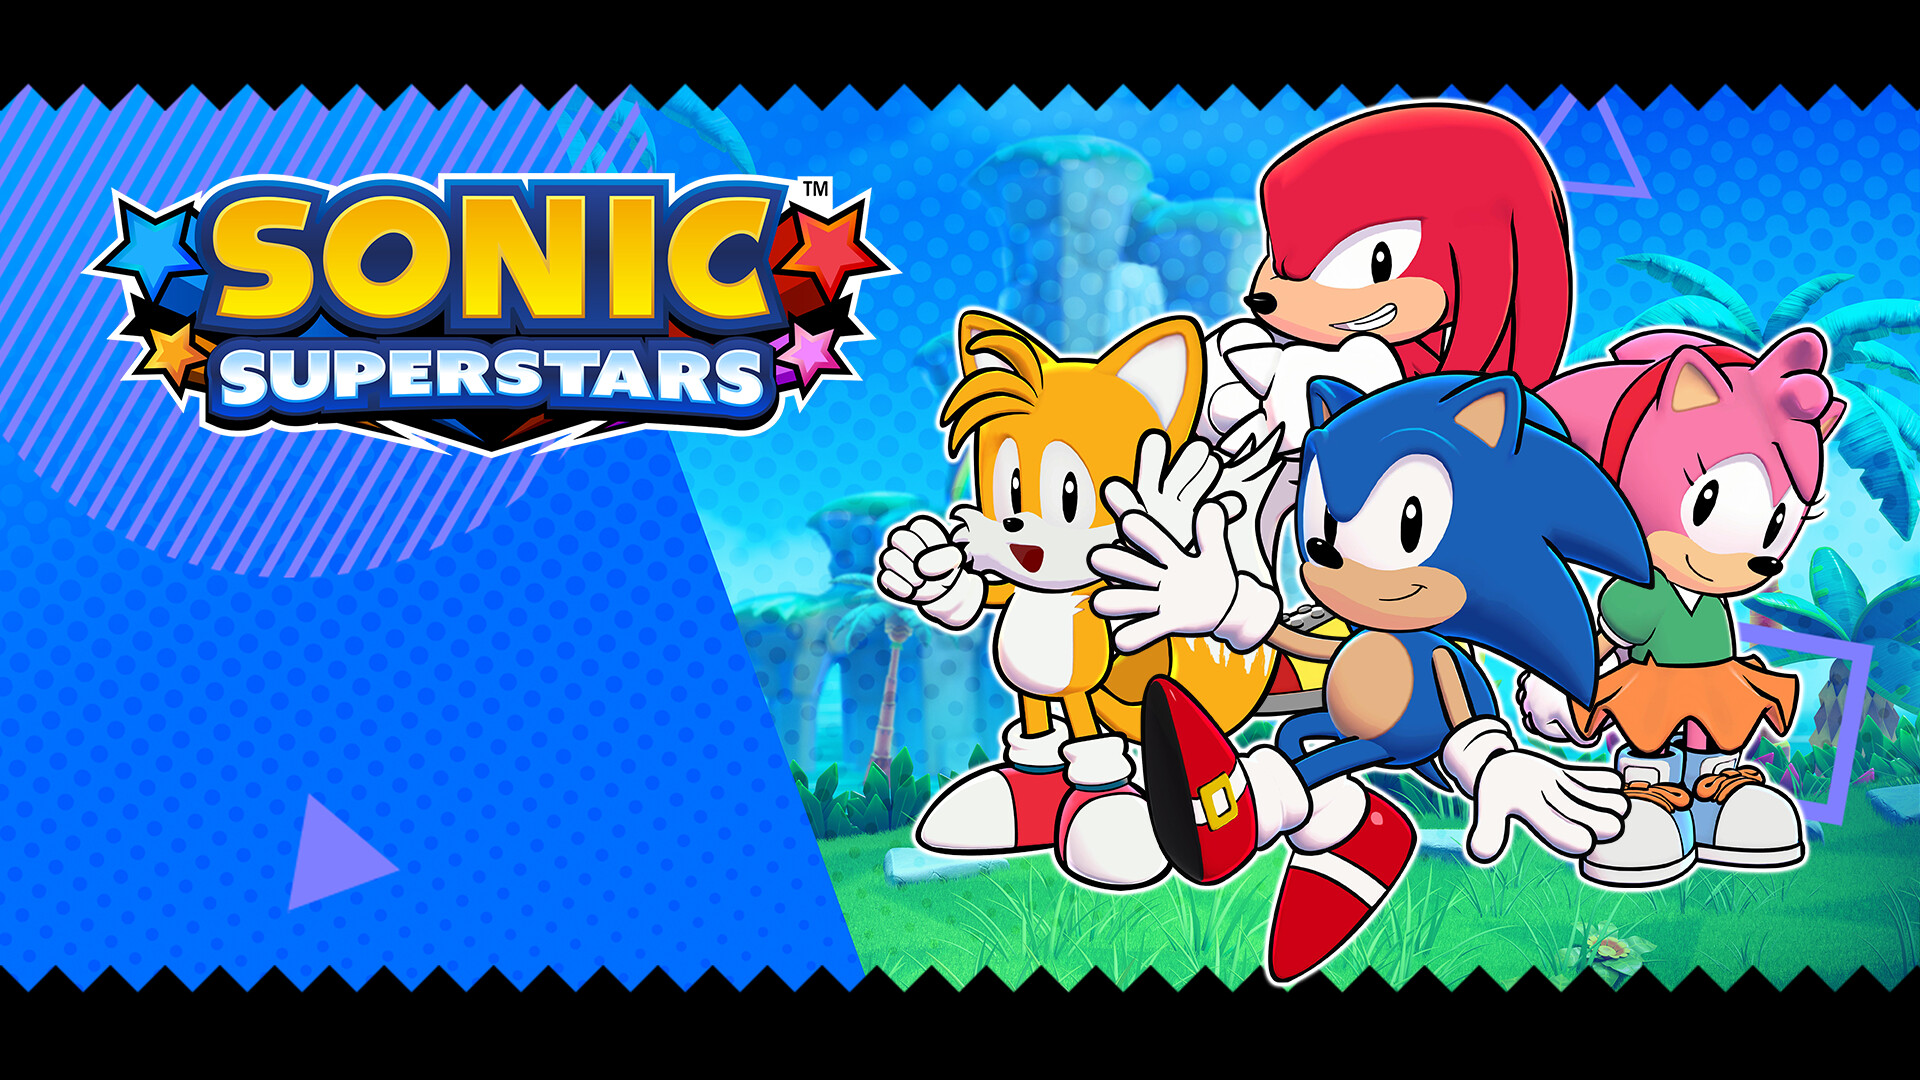 Sonic Superstars - Comic Book Skin Pack Featured Screenshot #1